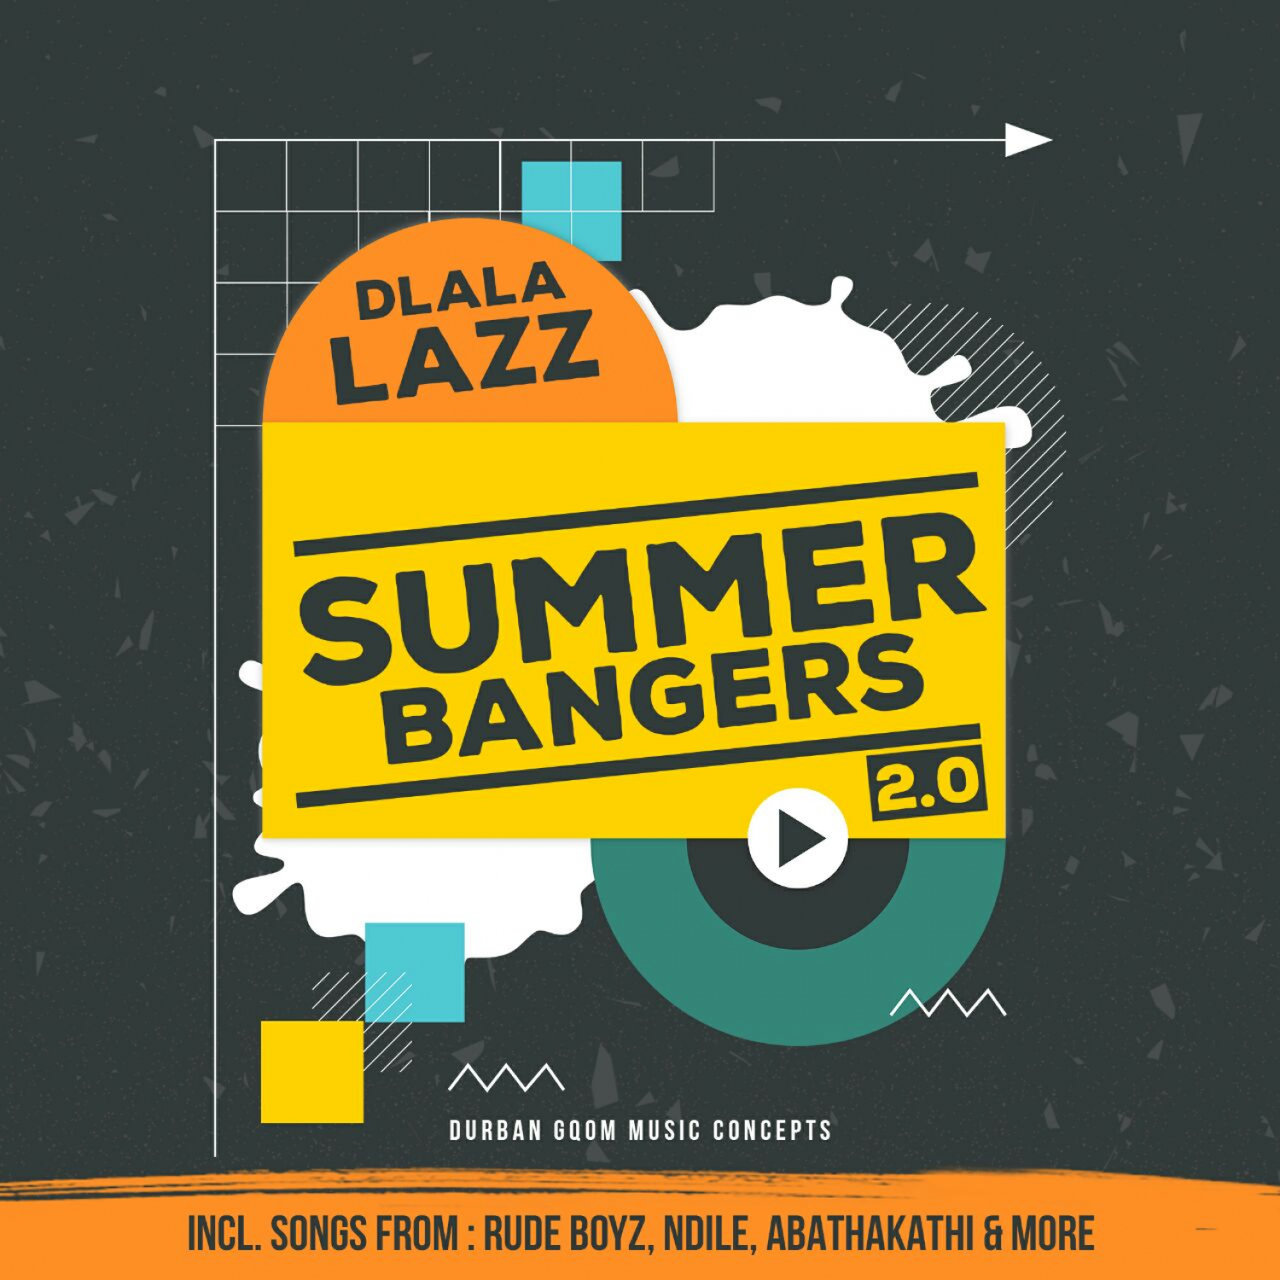 Dlala Lazz - Summer Bangers 2.0 / Durban Gqom Music Concepts